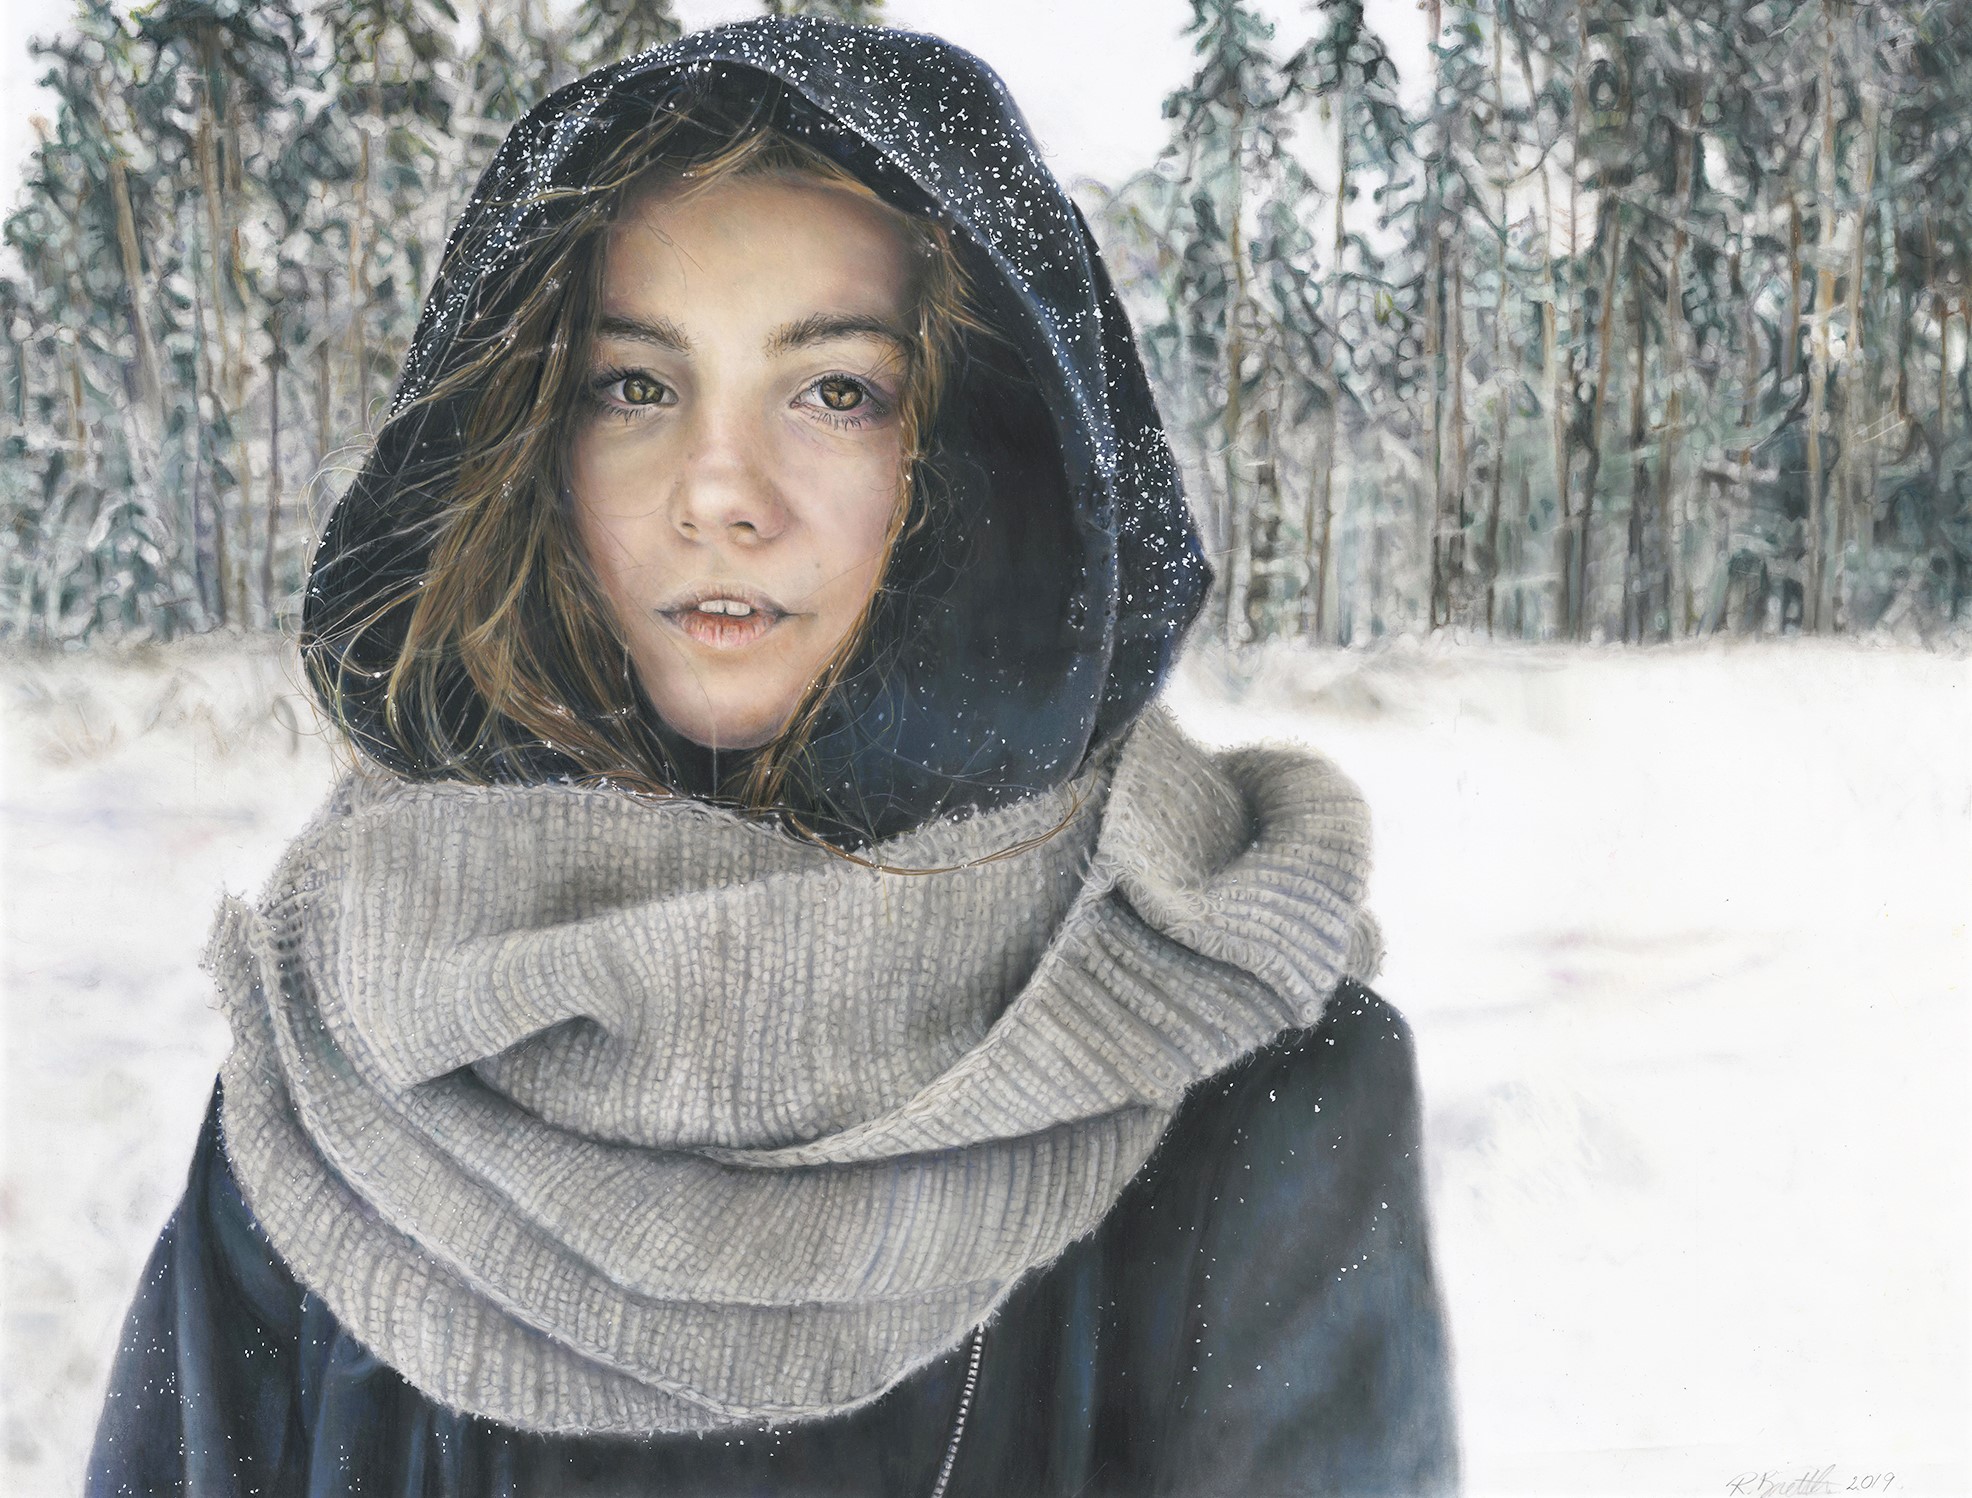 Realism Portraits - "Snowy Solitude" by Renee Brettler